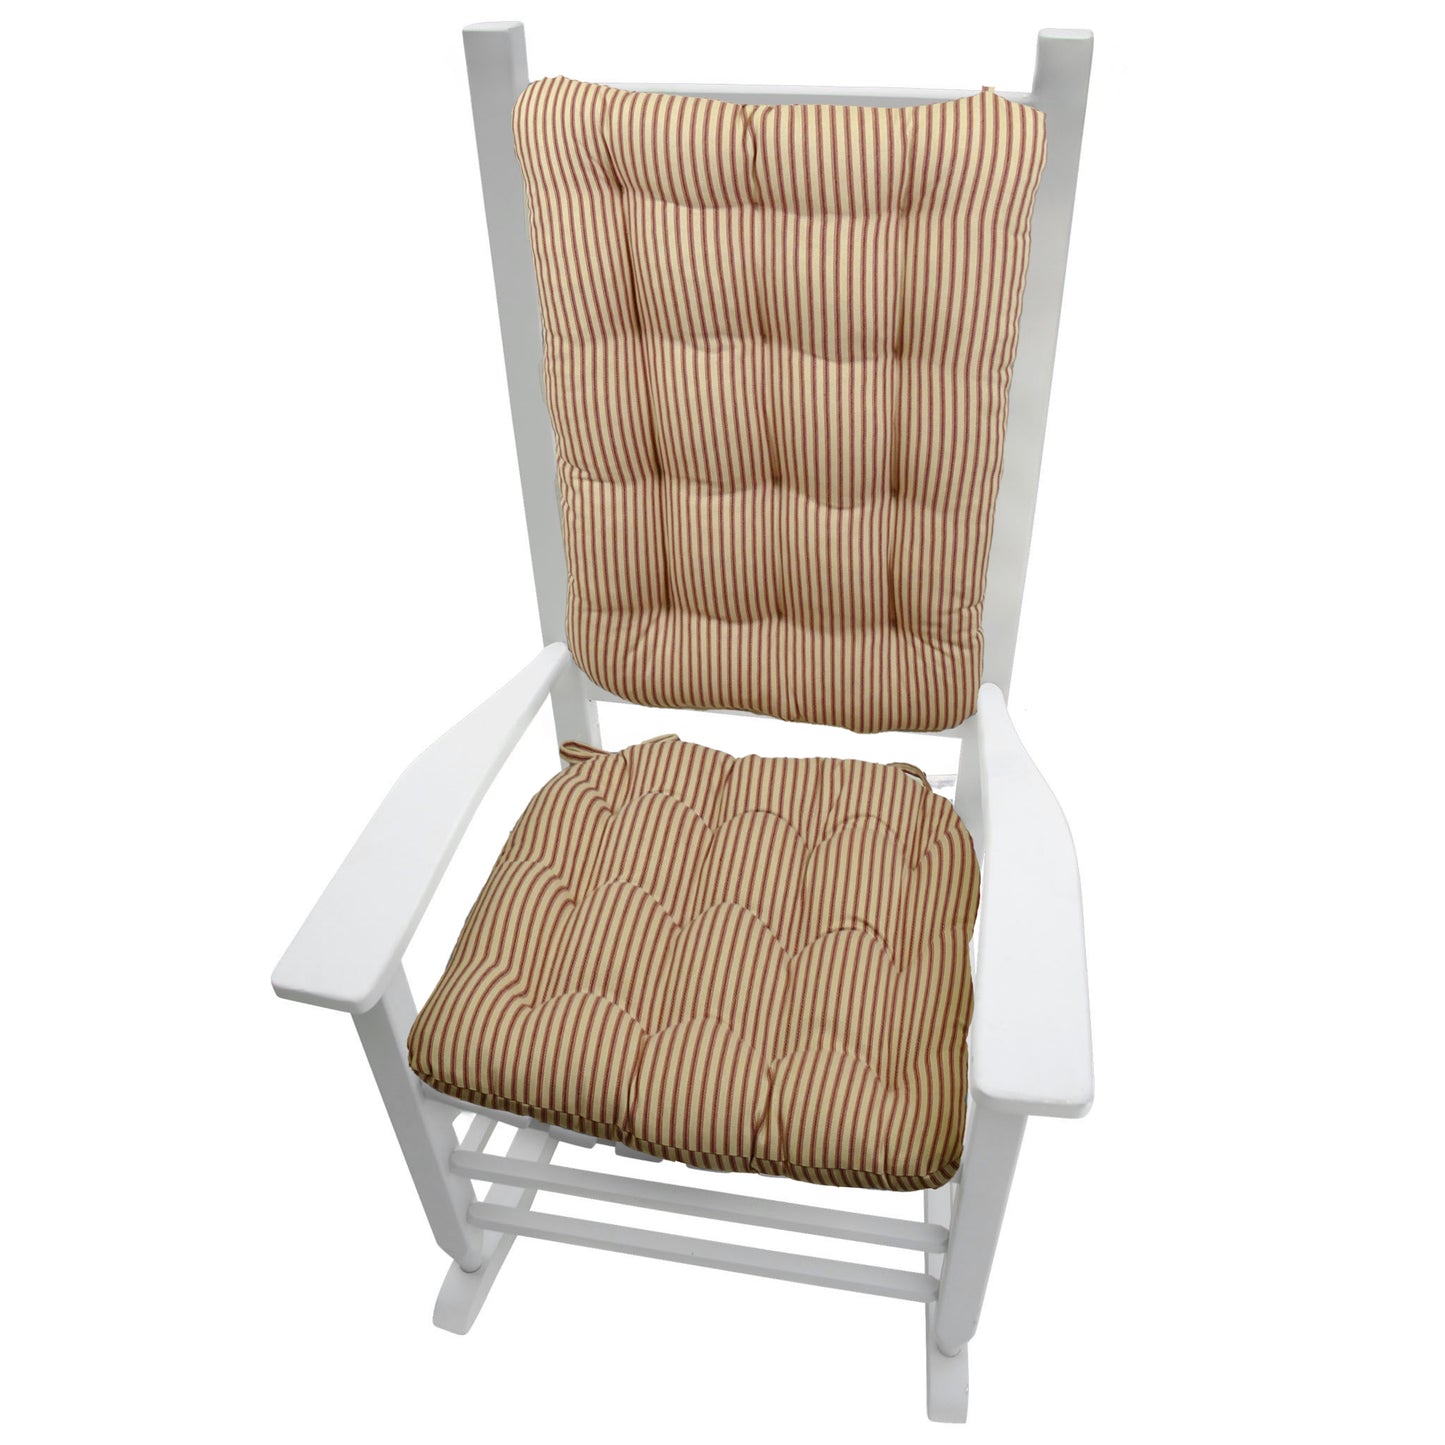 Ticking Stripe Berlin Red Rocking Chair Cushion Set - Flash Sale